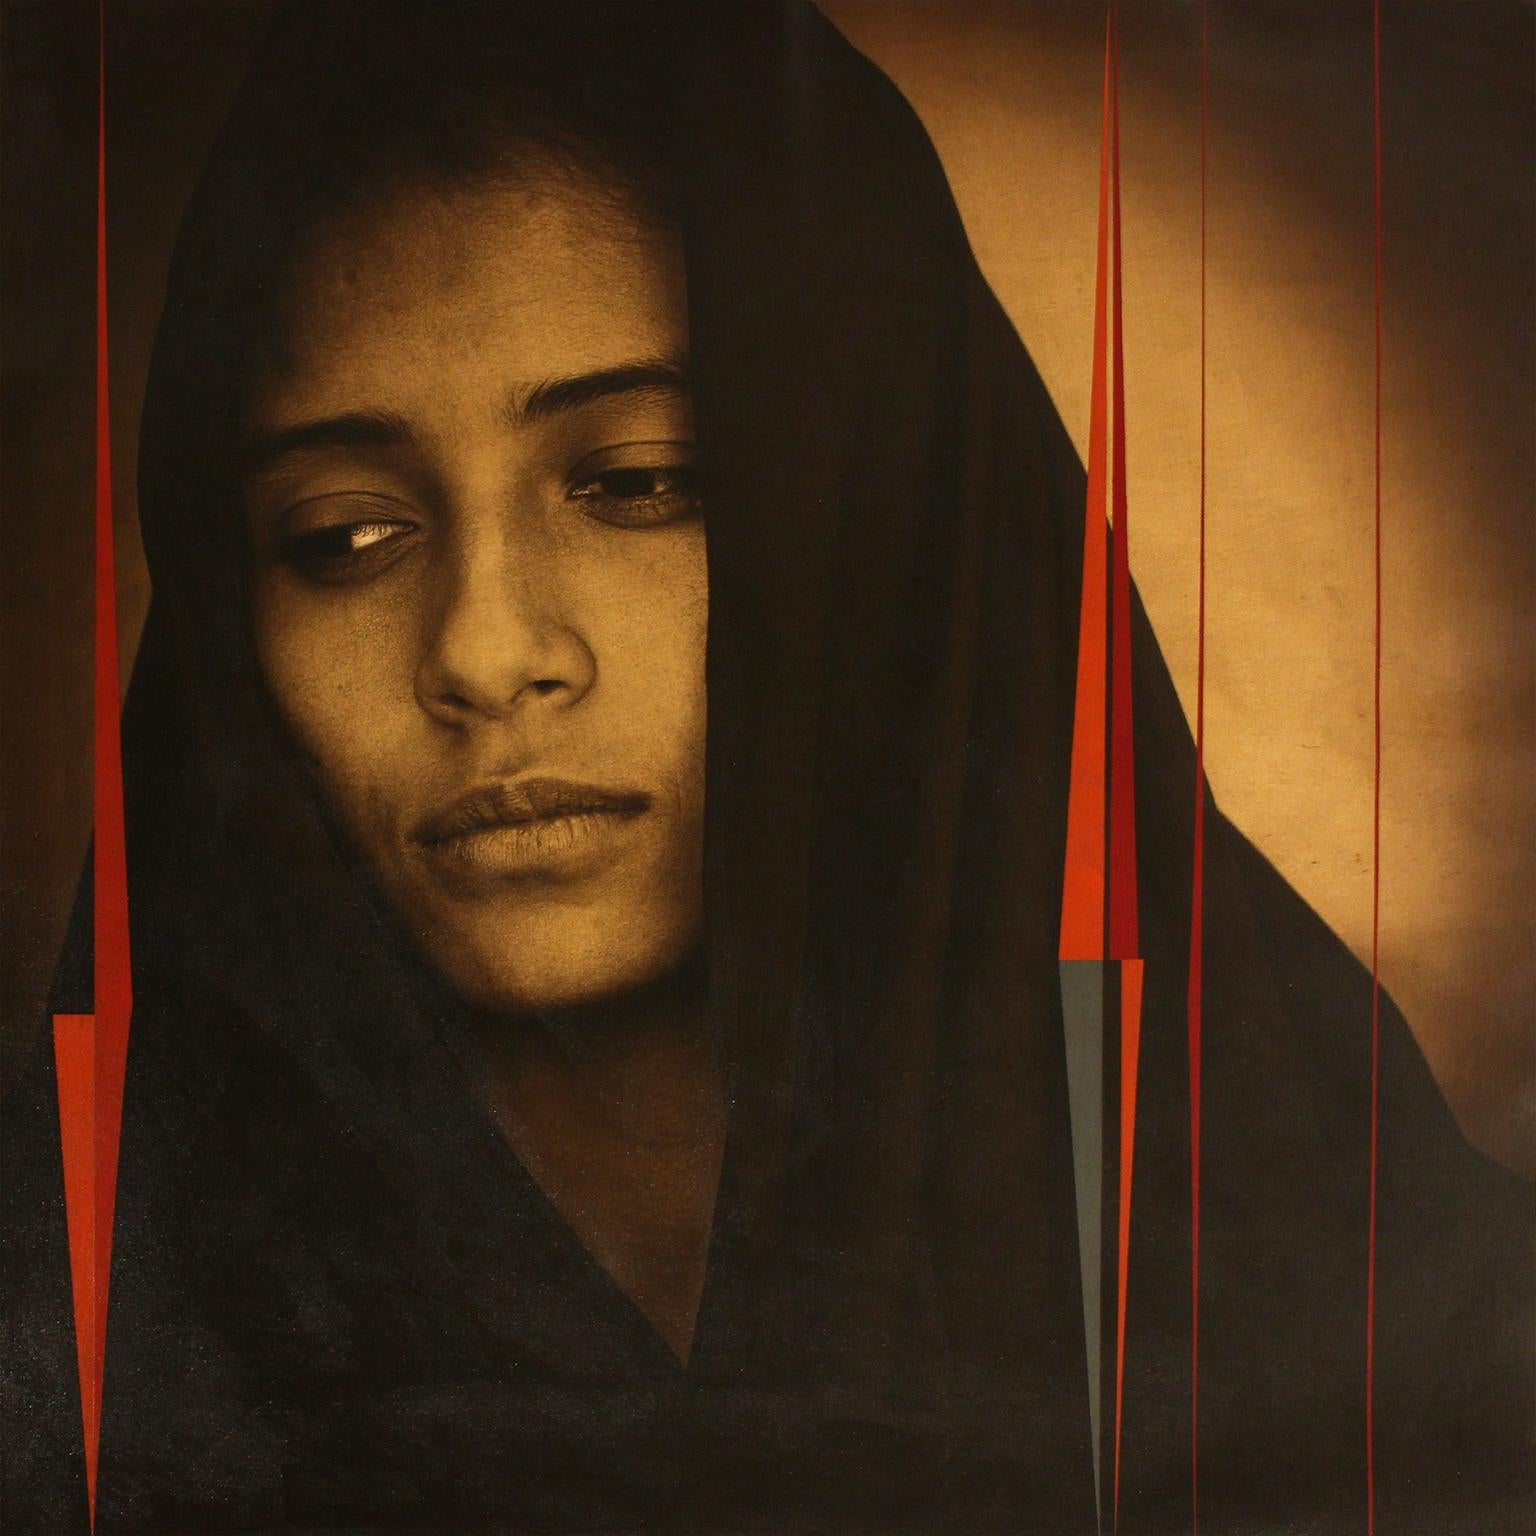 Luis Gonzalez Palma Portrait Photograph - "Mobius - Perdida en su Pensamiento (Lost in Thought)" photograph on canvas